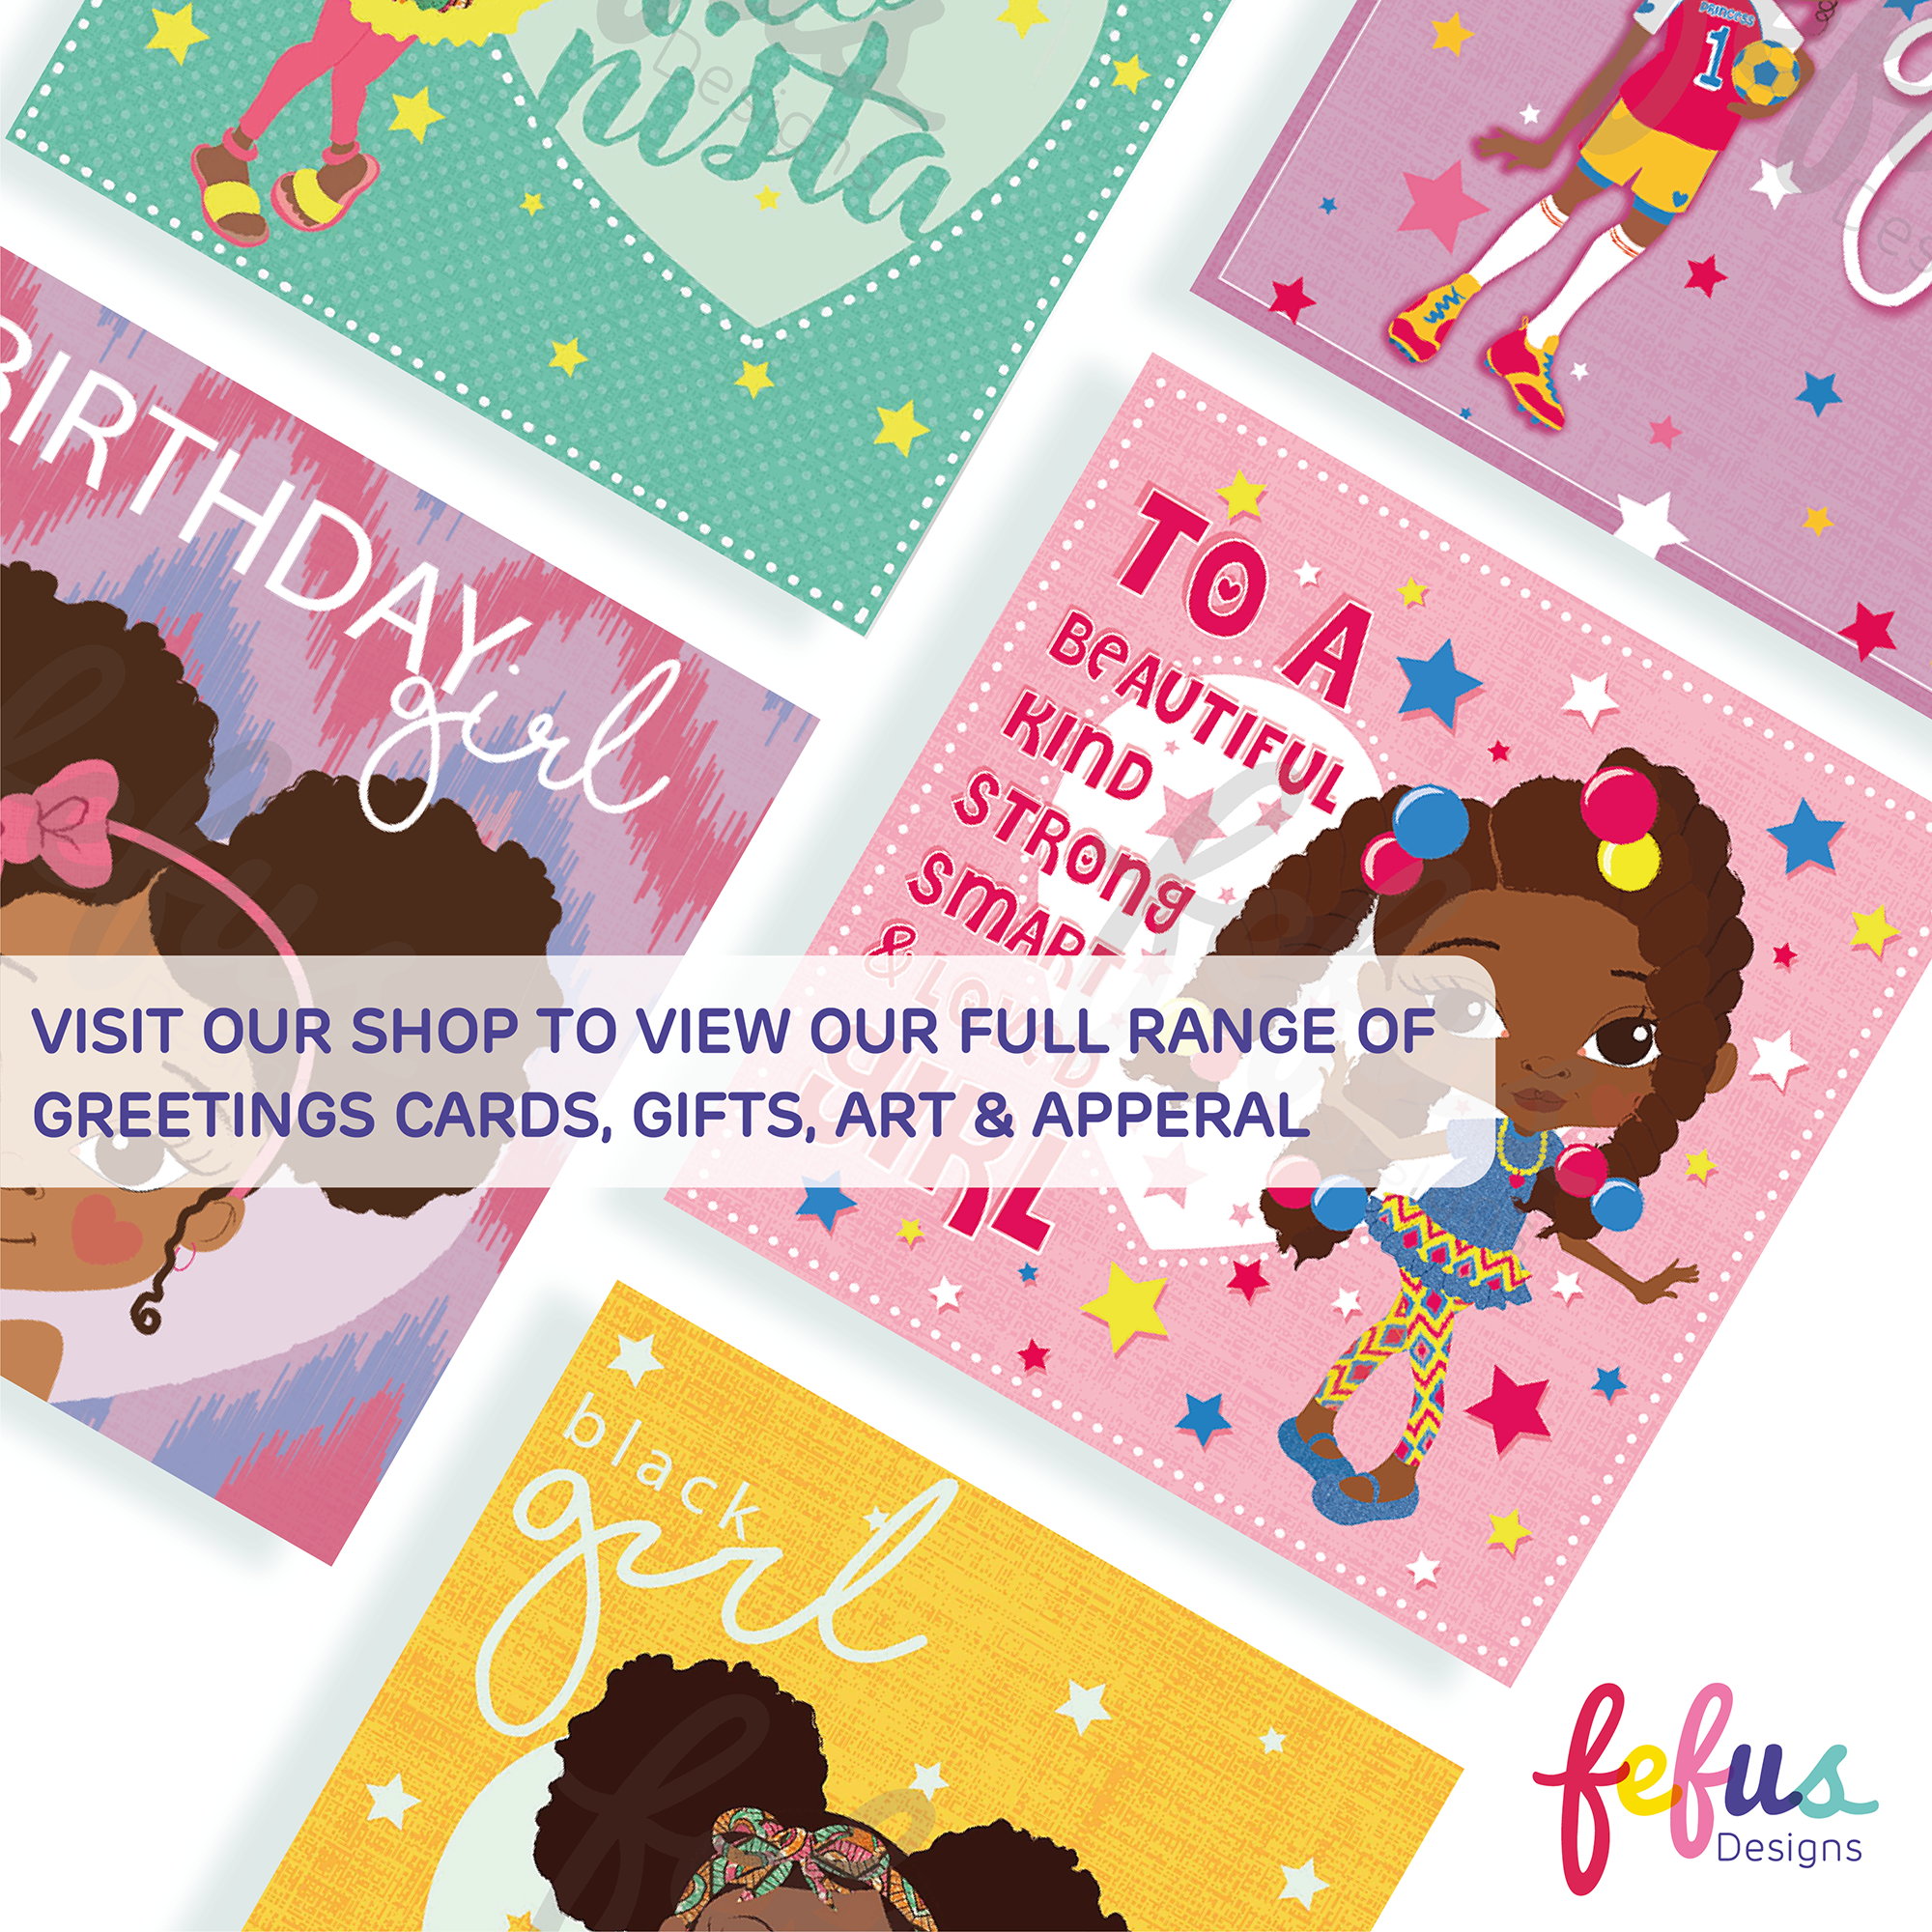 Lela - Football Girl - Black childrens Greetings Card | Fefus designs